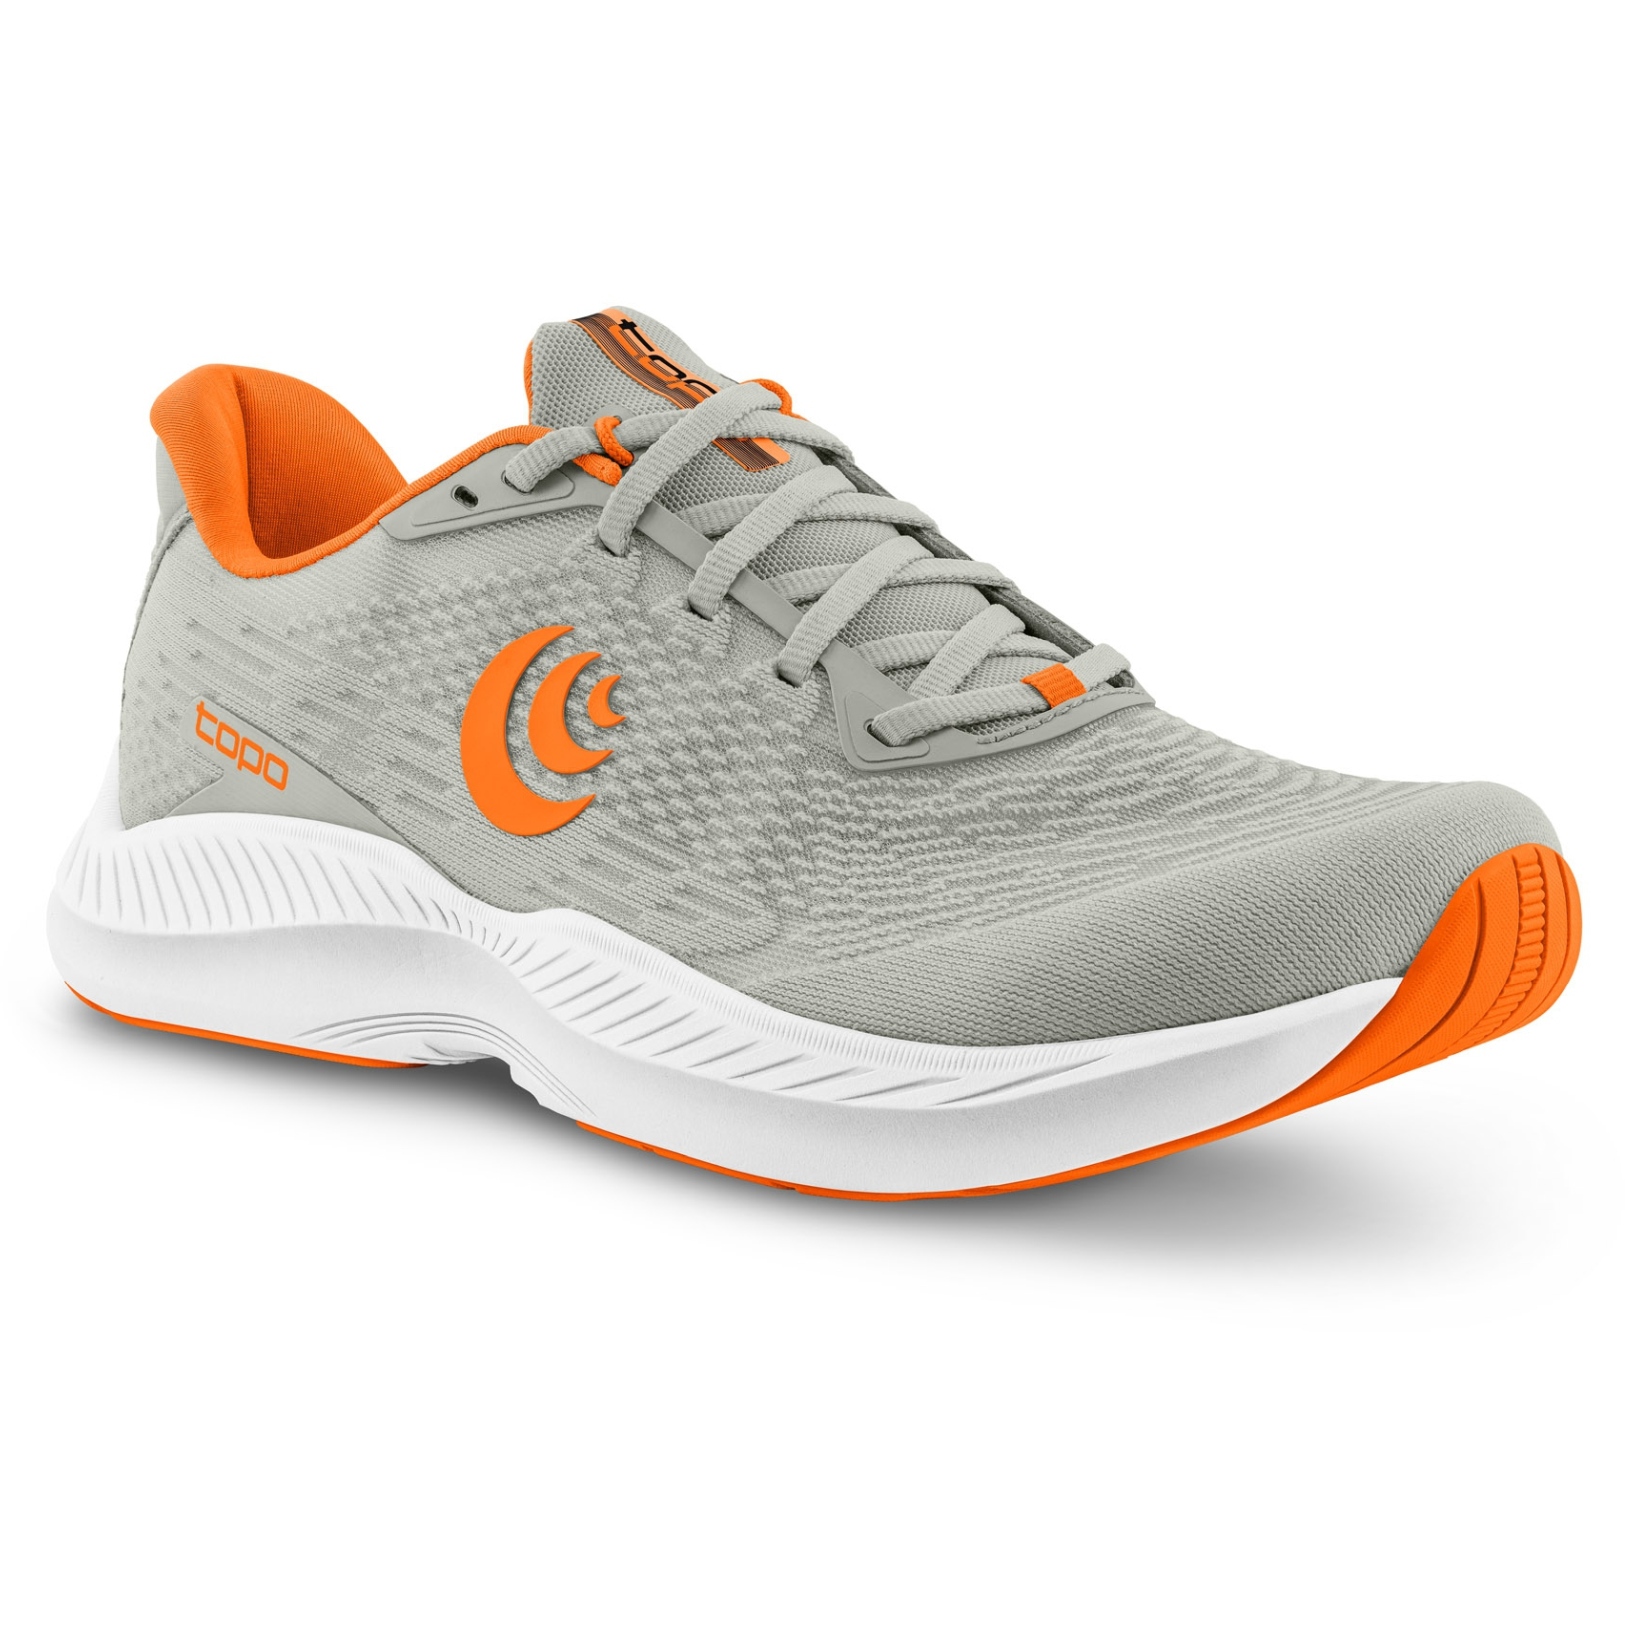 Produktbild von Topo Athletic Fli-Lyte 5 Laufschuhe - grau/orange